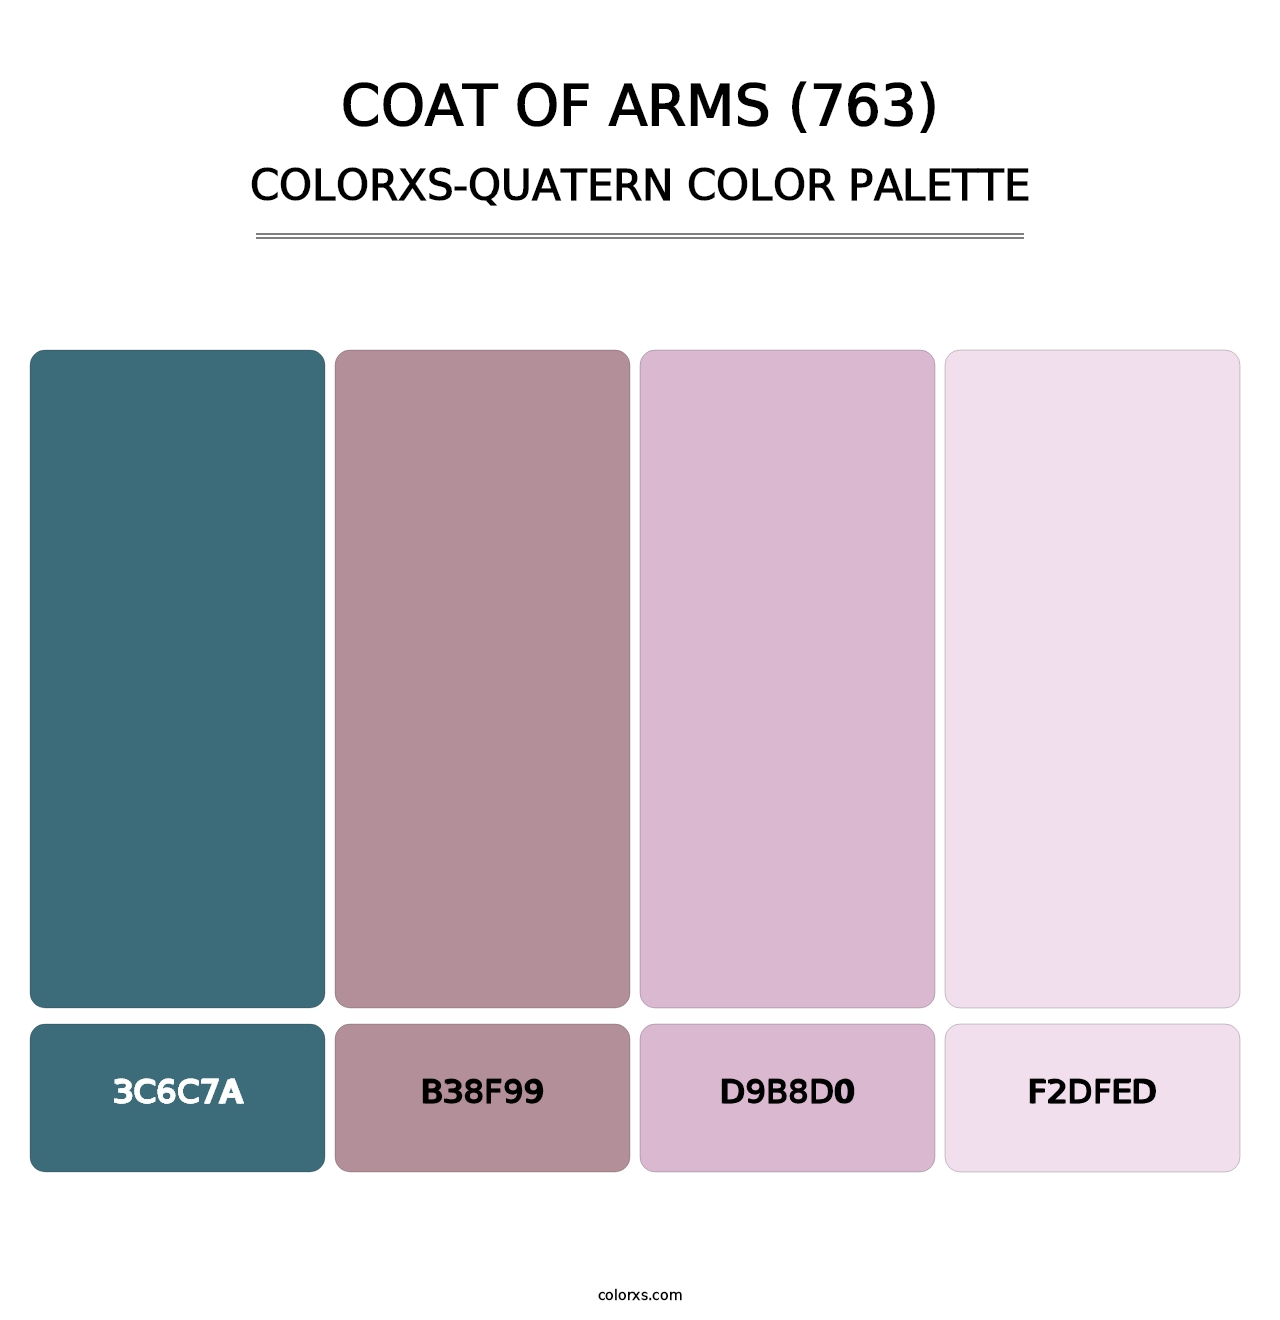 Coat of Arms (763) - Colorxs Quatern Palette